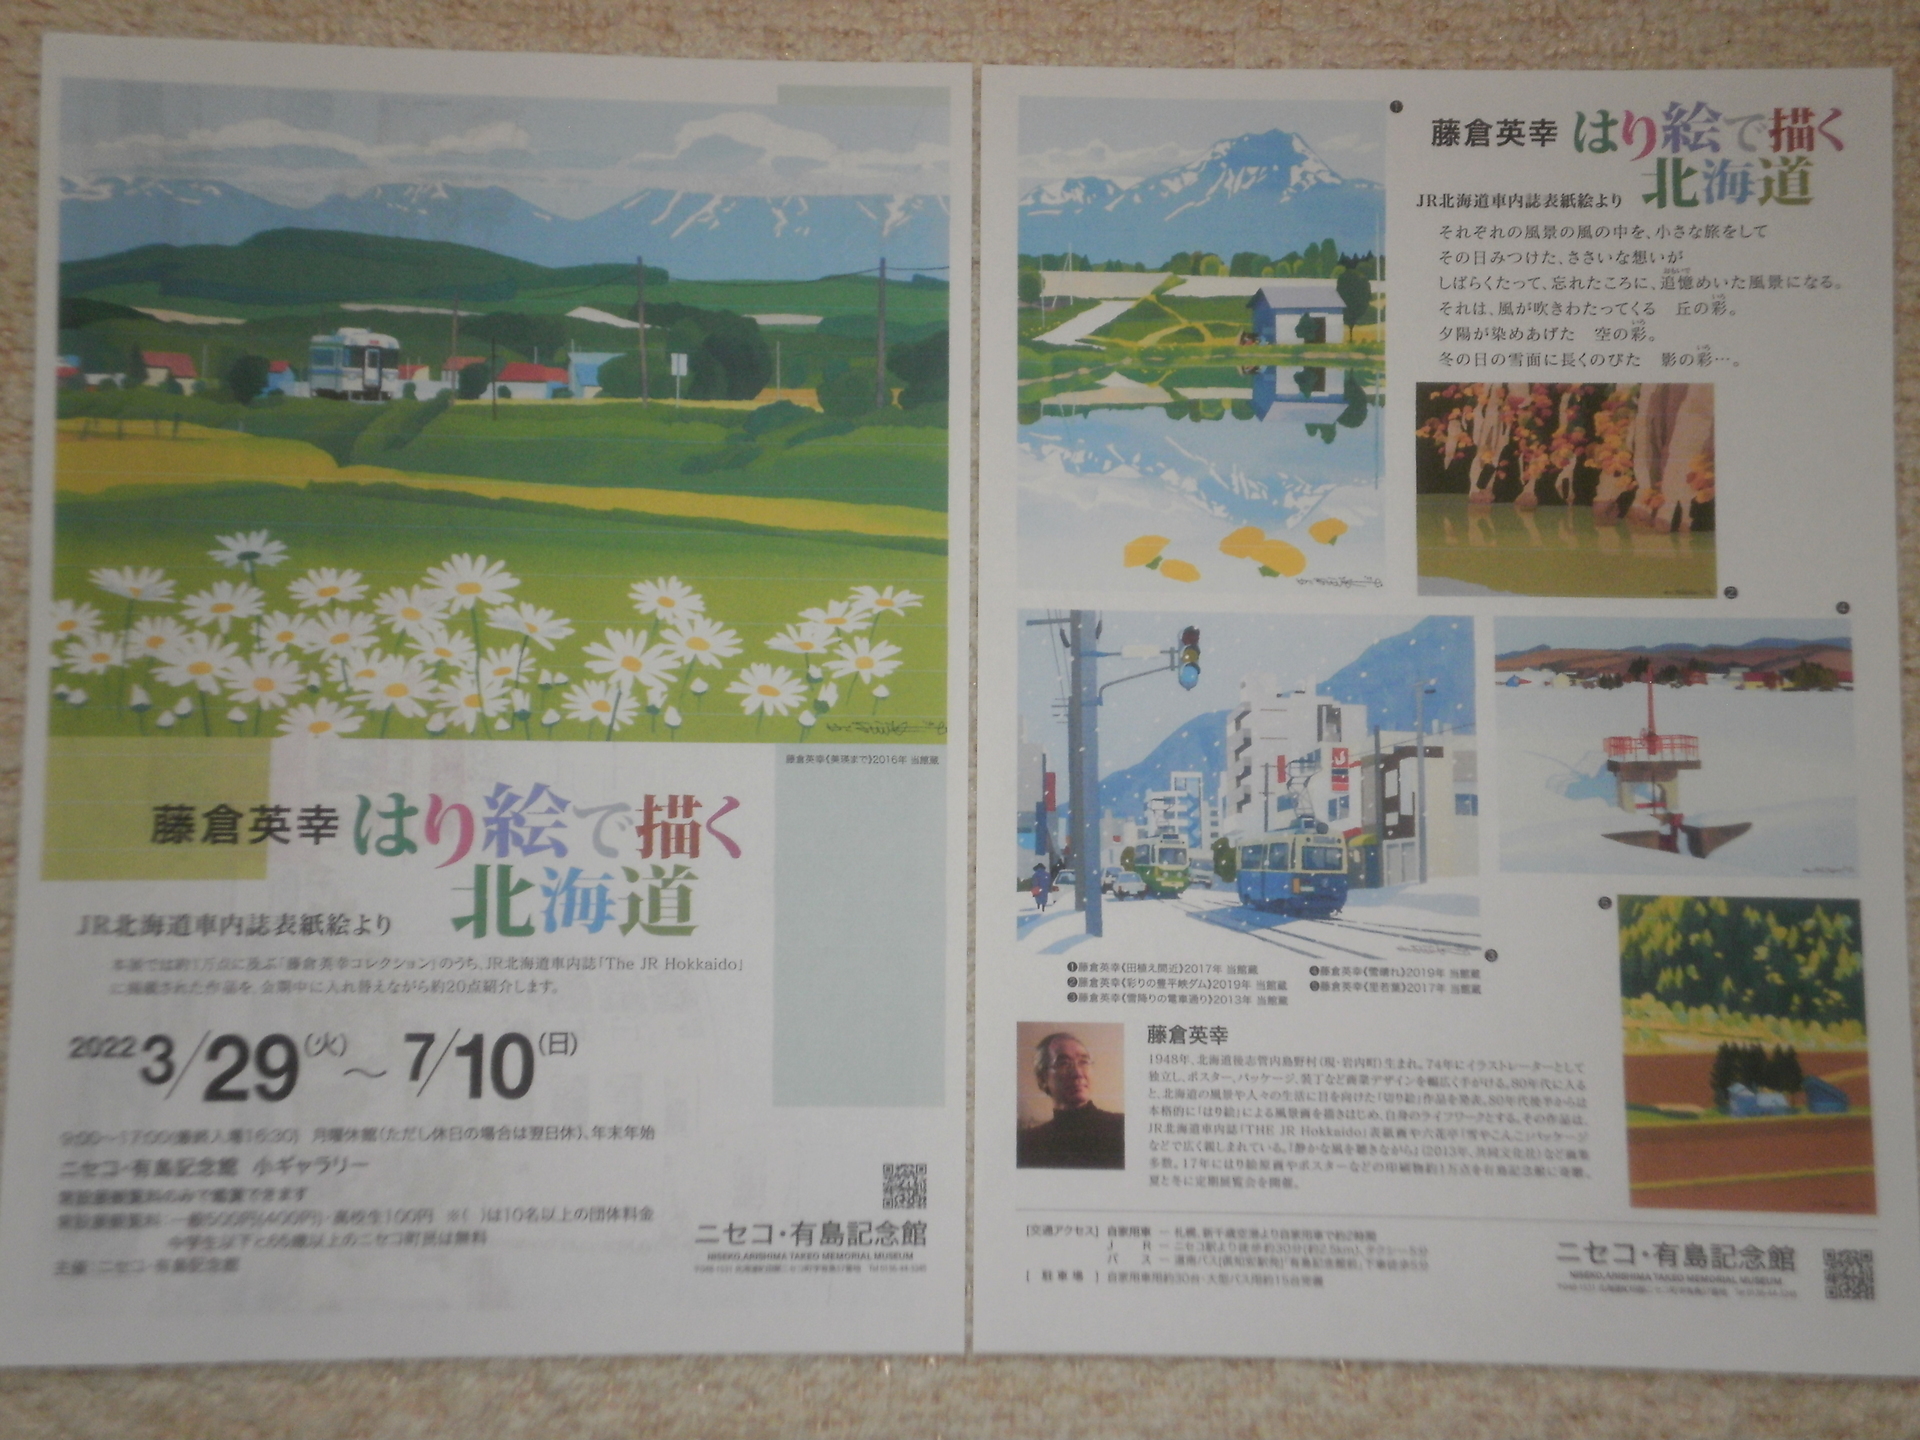 DF　JR　HOKKAIDO　北海道旅の情報誌 全巻　現在発行分（一部欠番あり）